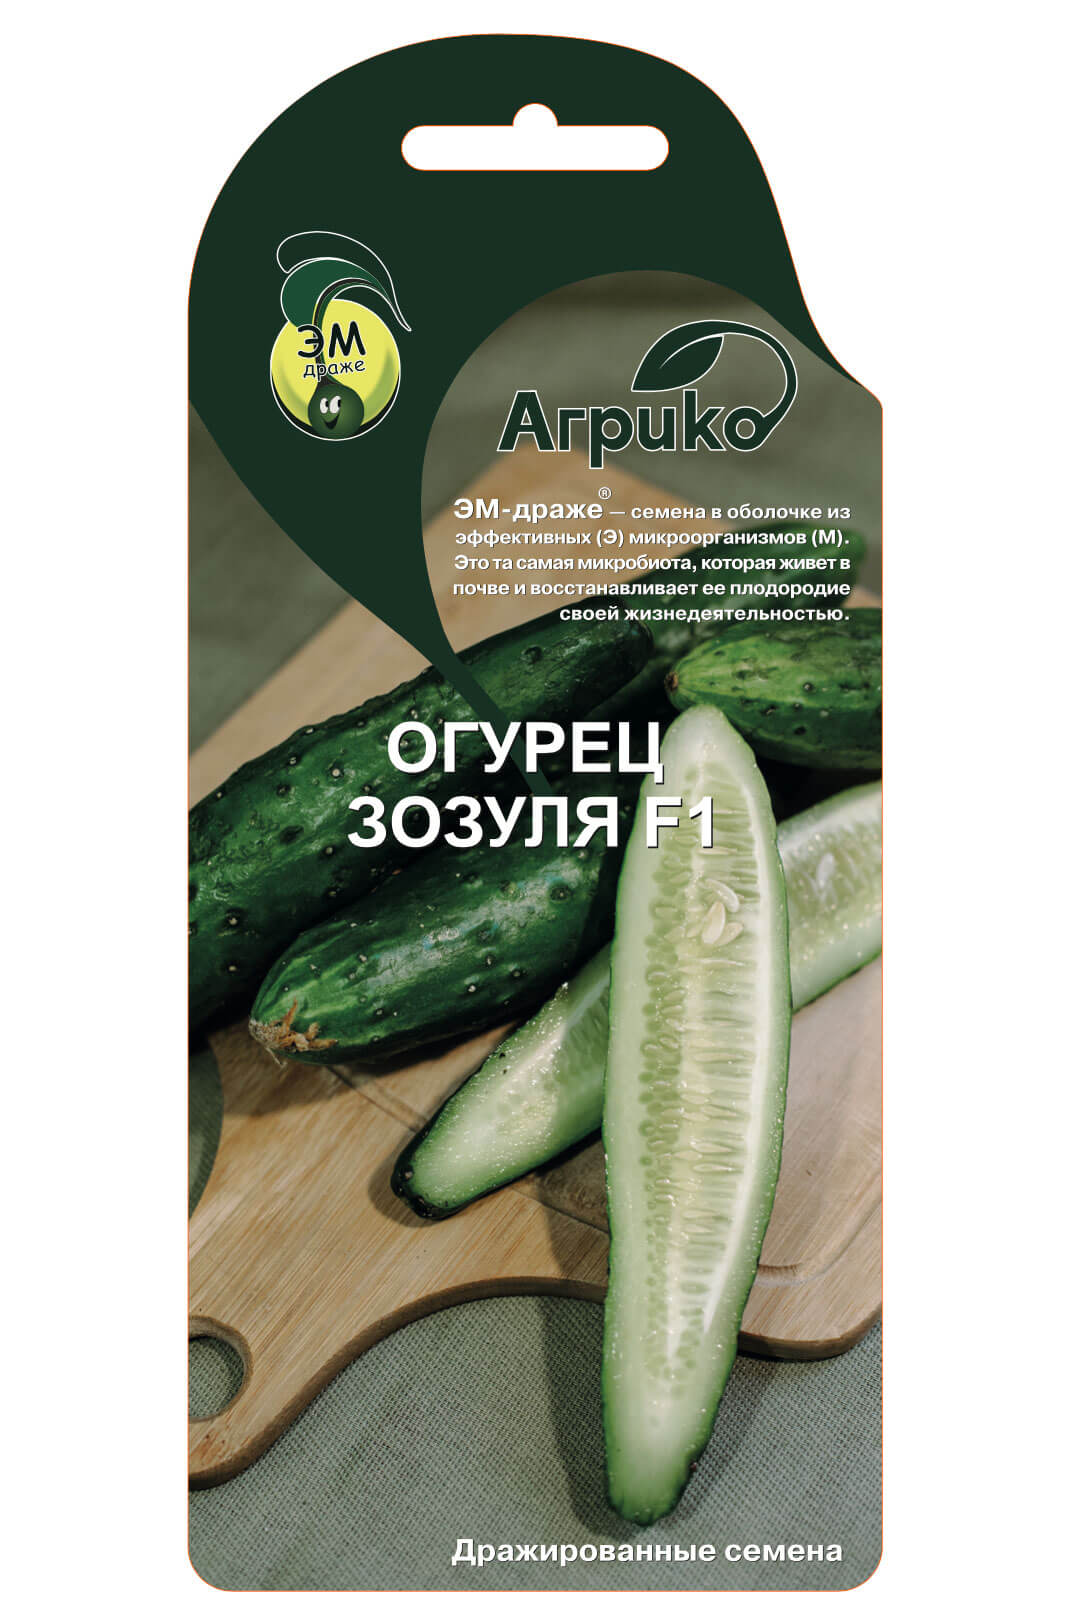 emdraje/emdrajeagriko-cucumber-zozulya-f1-1.jpg